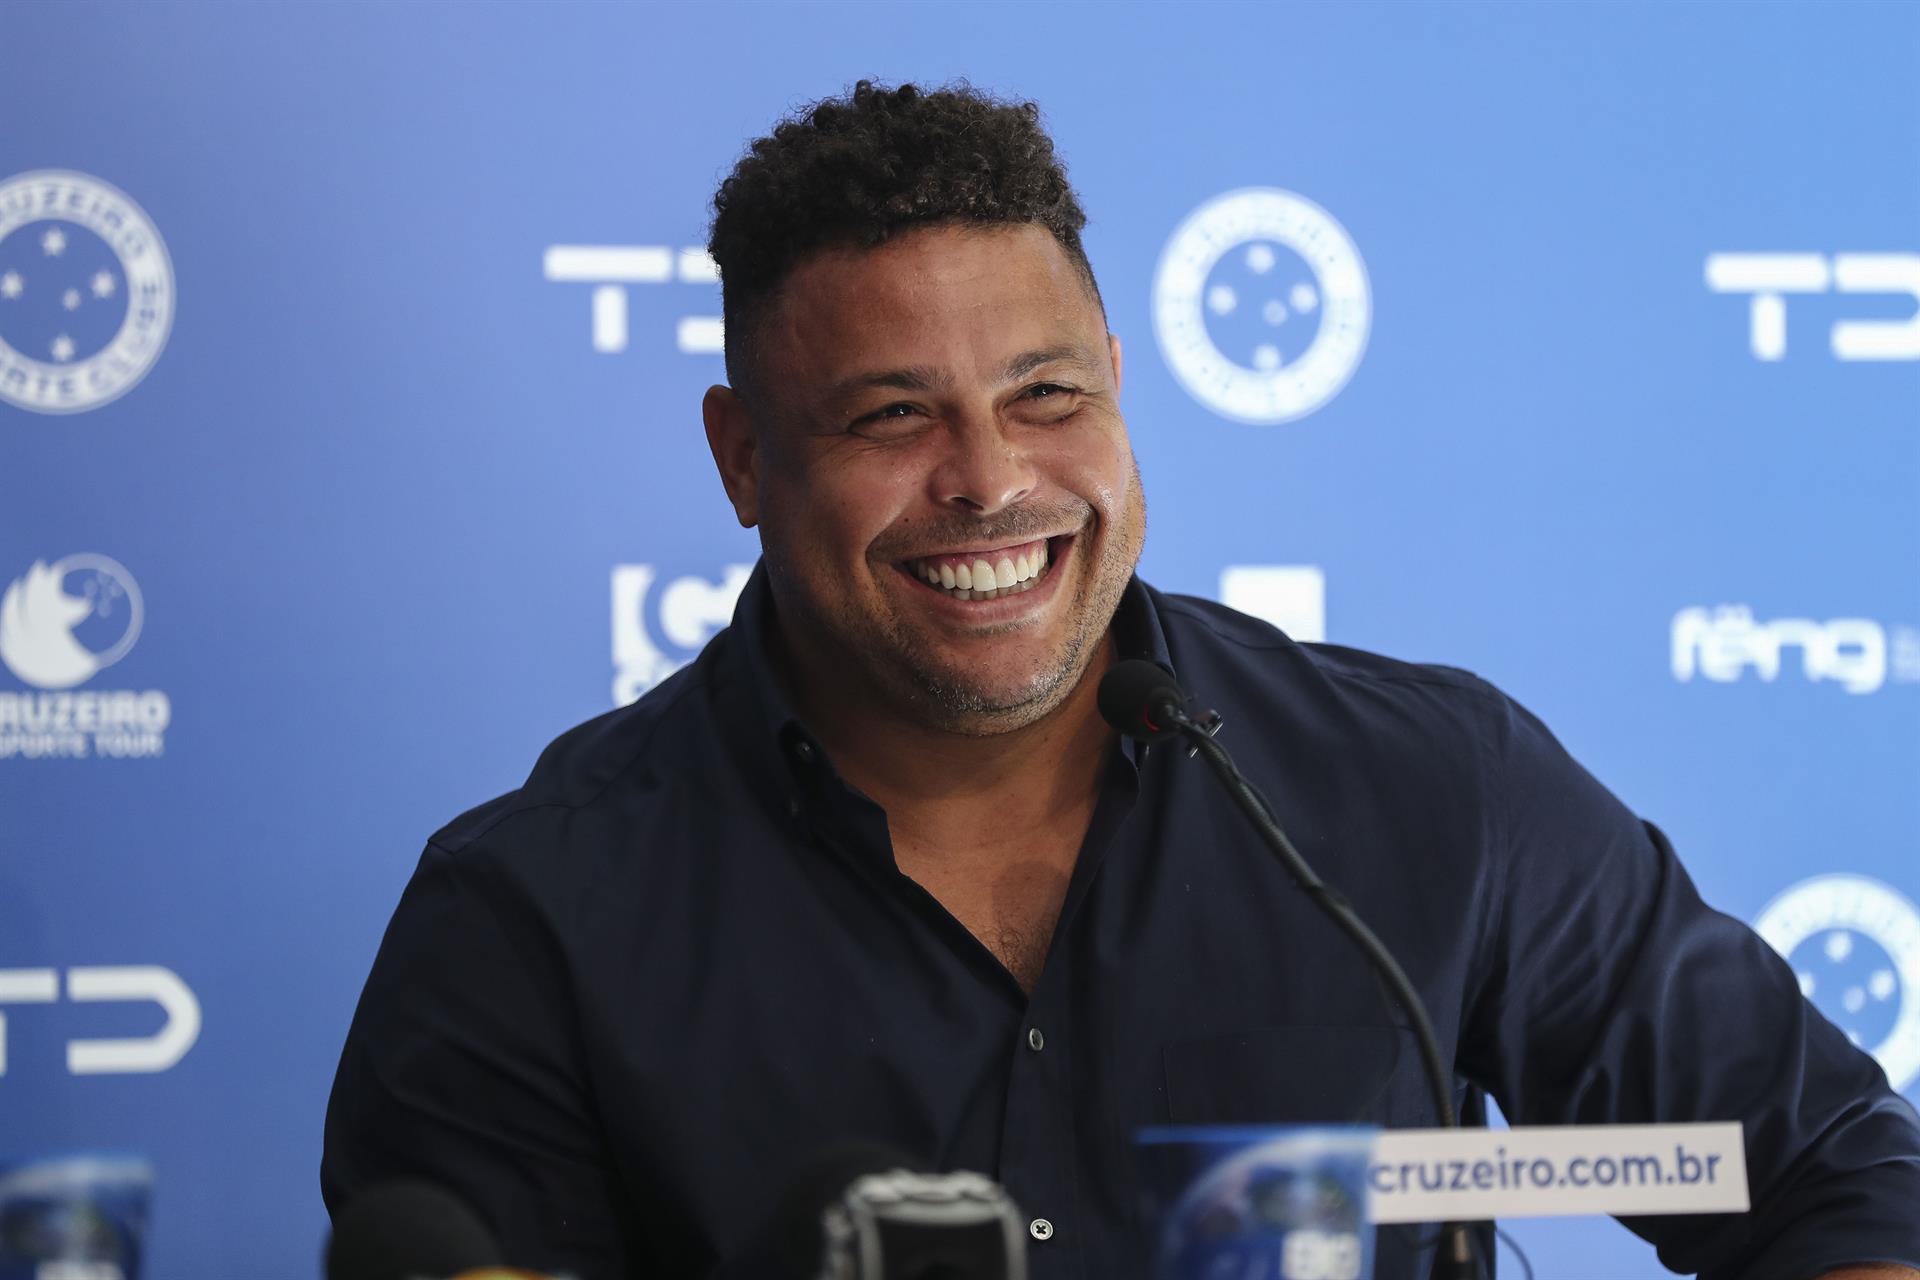 El presidente del Cruzeiro, Ronaldo Nazário, habla durante una rueda de prensa, hoy en Sao Paulo (Brasil). EFE/Sebastiao Moreira